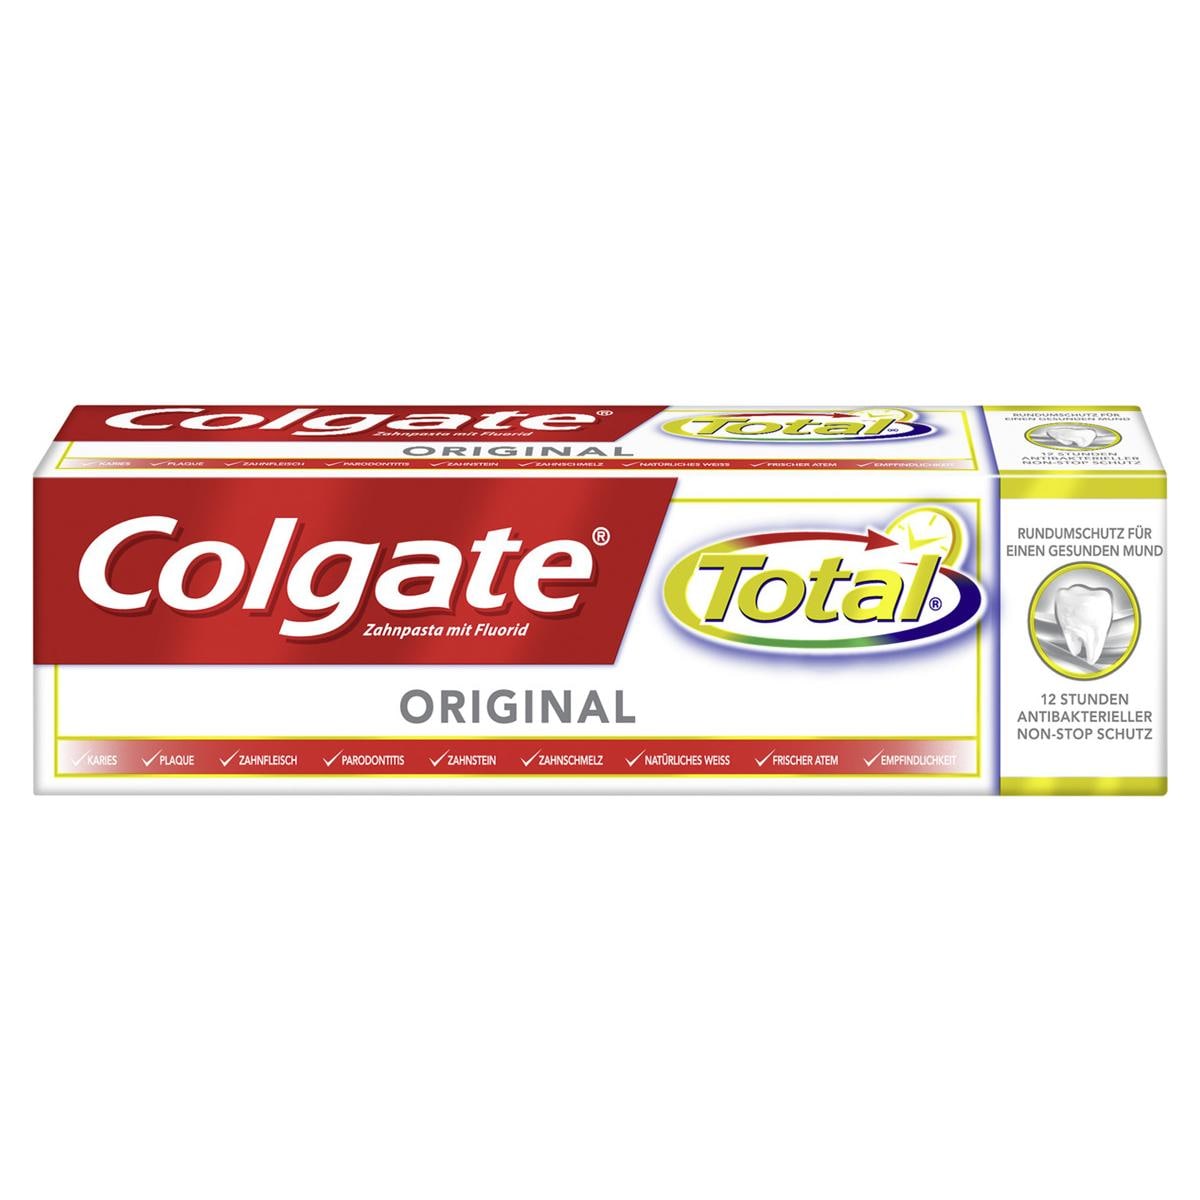 Colgate® Total Original - Tuben 12 x 75 ml